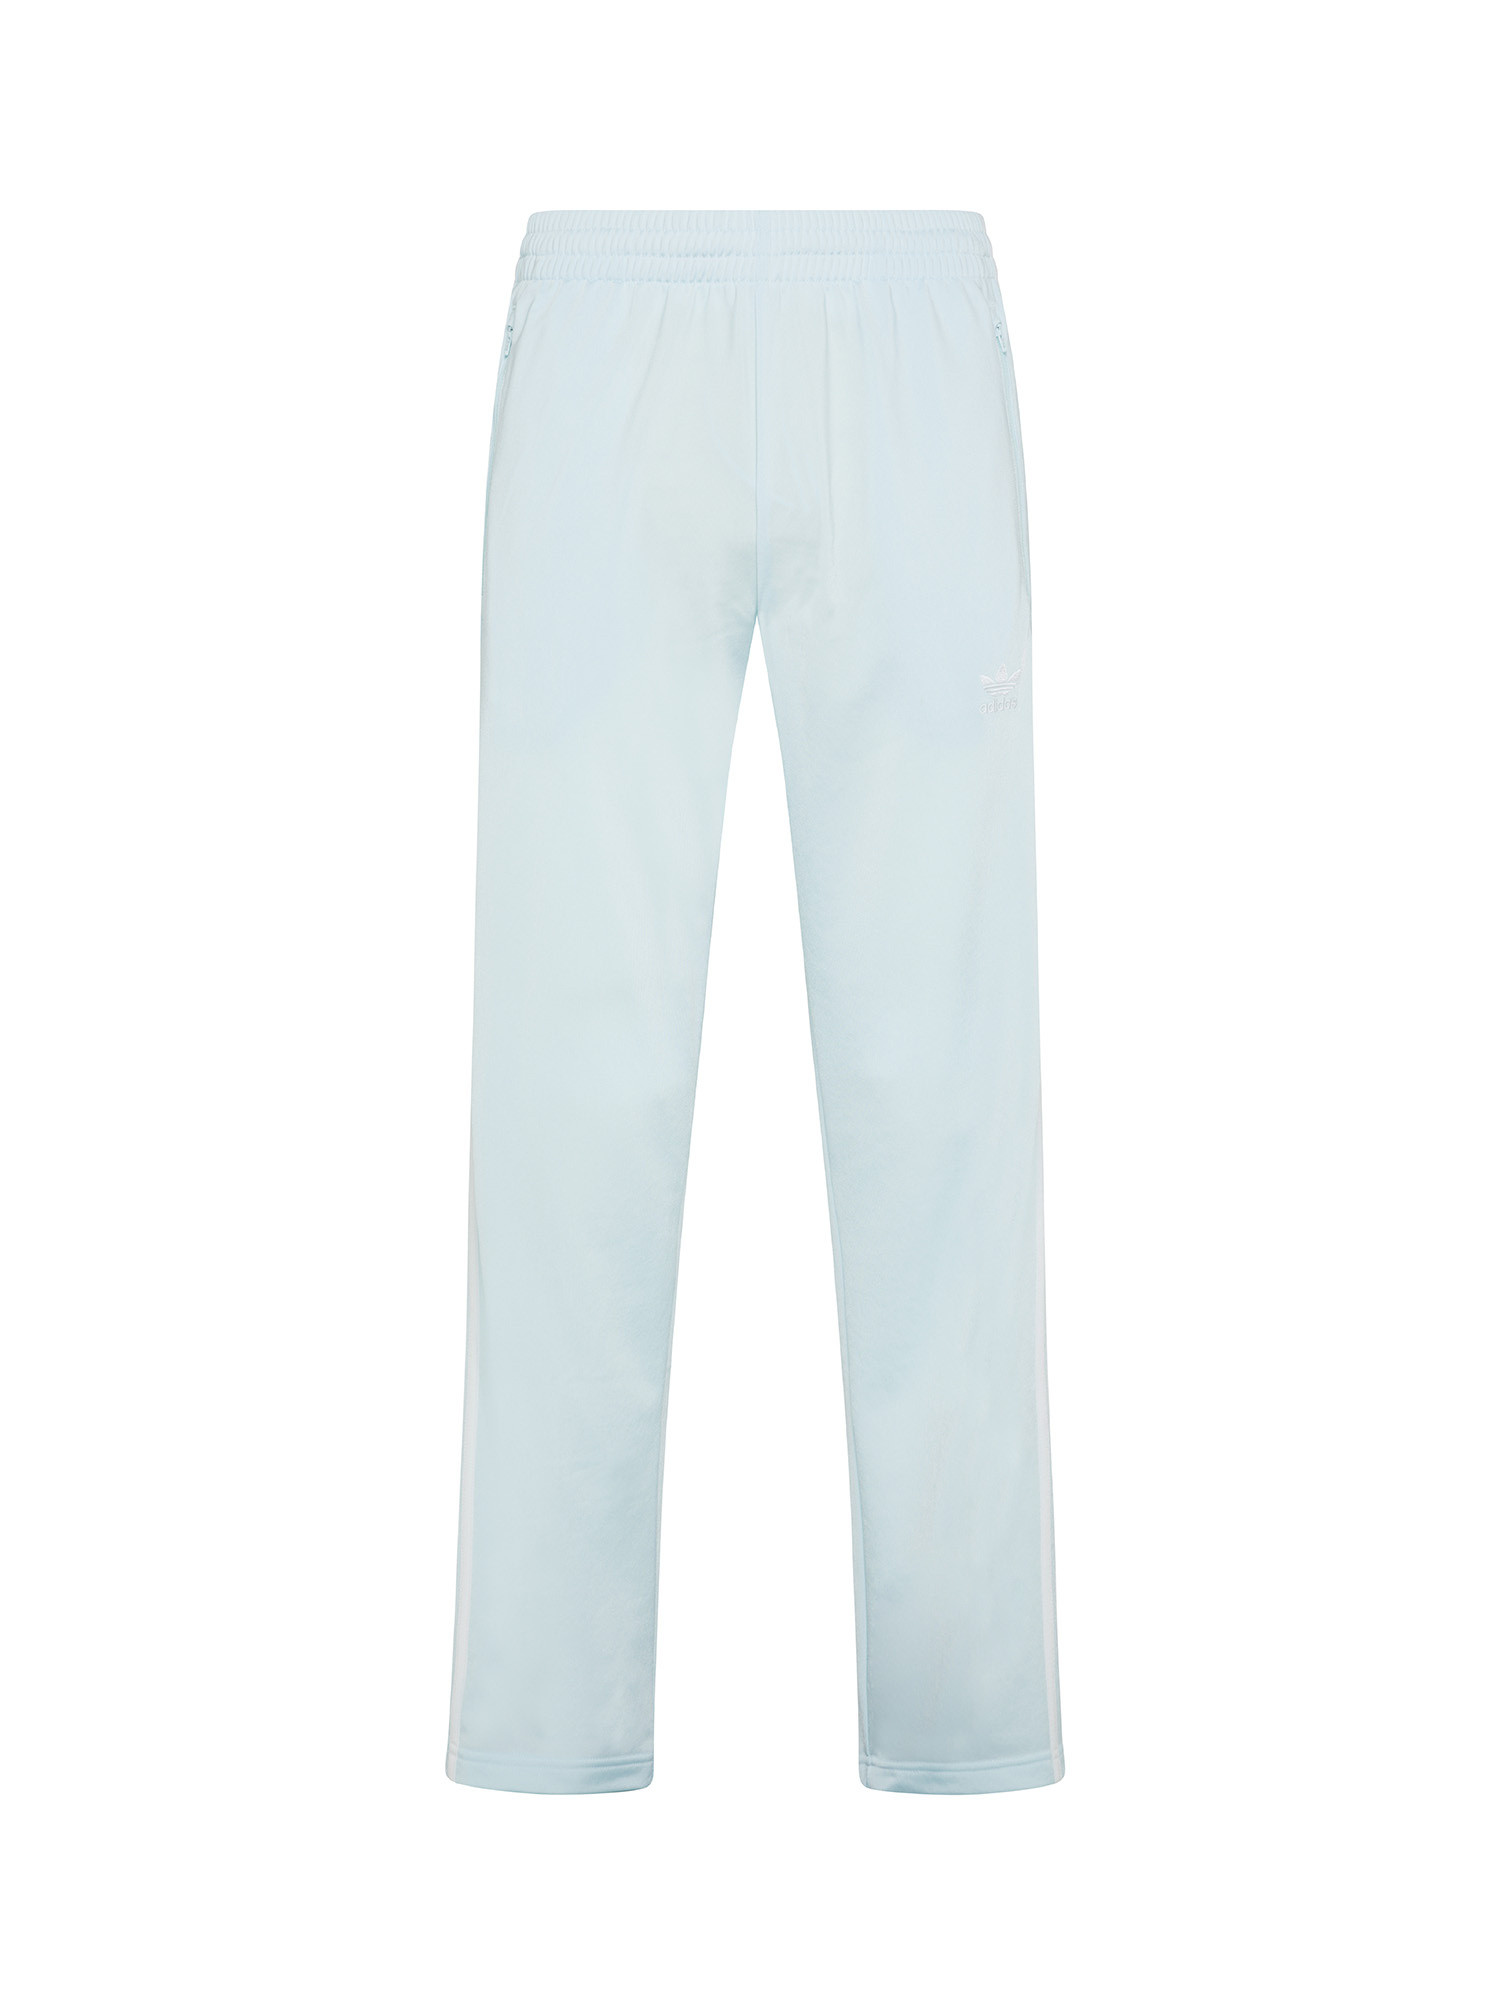 Adidas - Pantalone sportivo adicolor, Azzurro chiaro, large image number 0